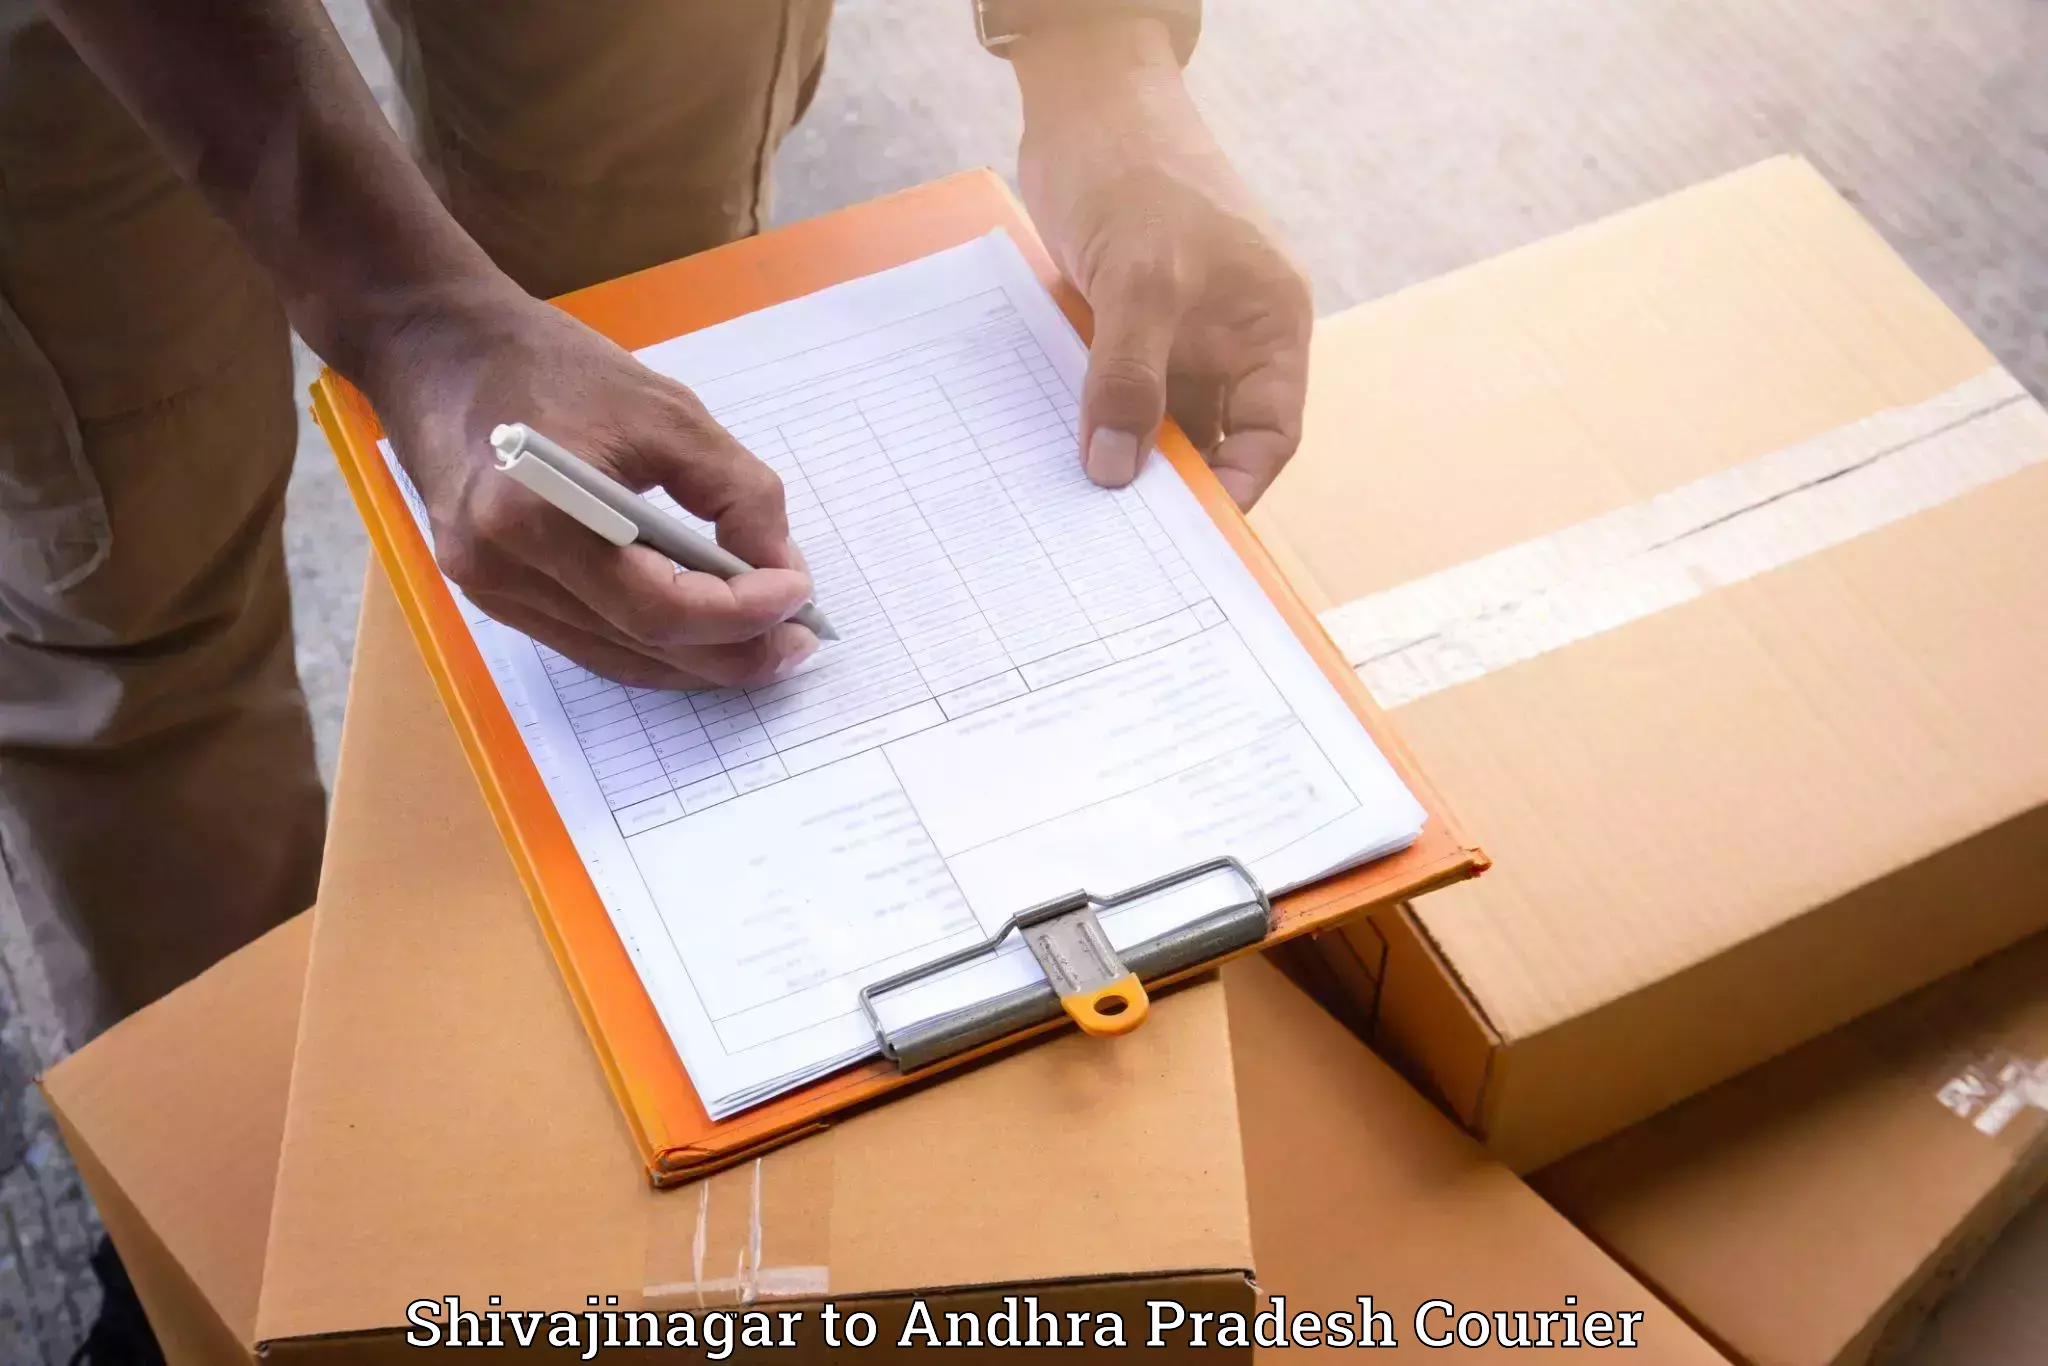 Furniture delivery service Shivajinagar to Gajapathinagaram